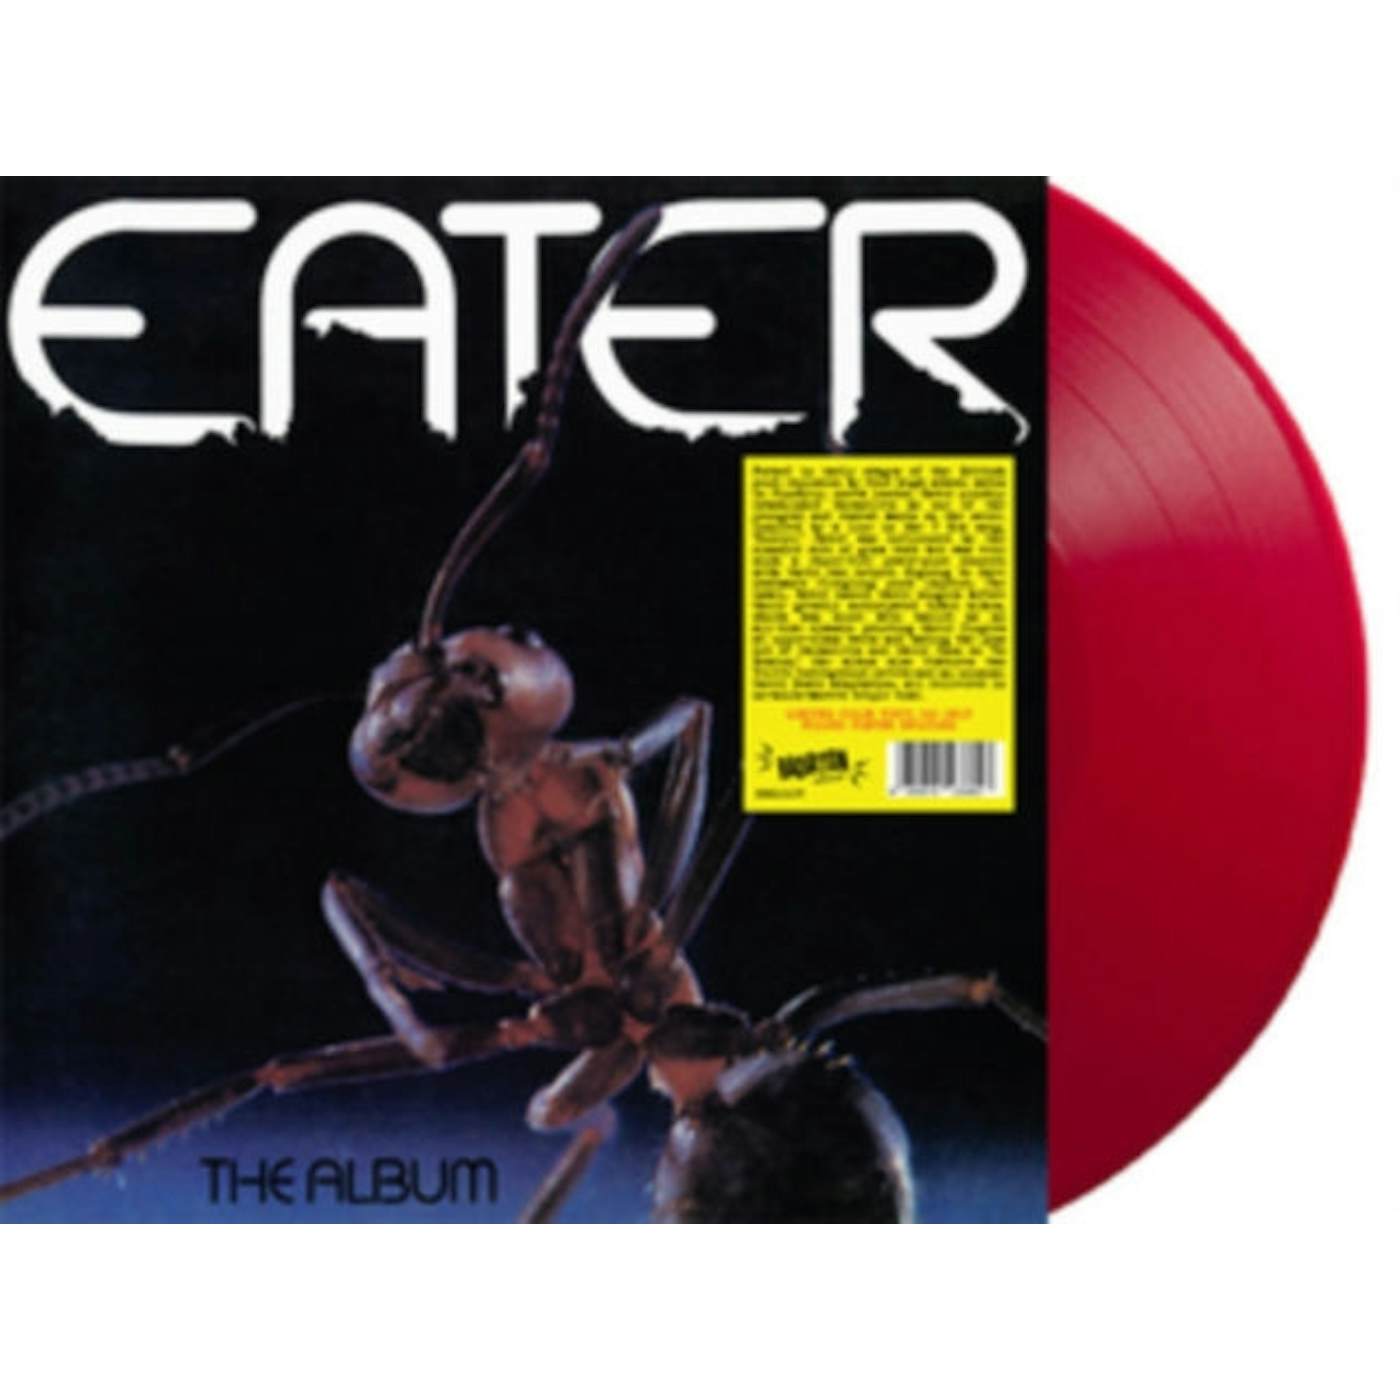 Eater LP Vinyl Record - The Album (Red Vinyl)